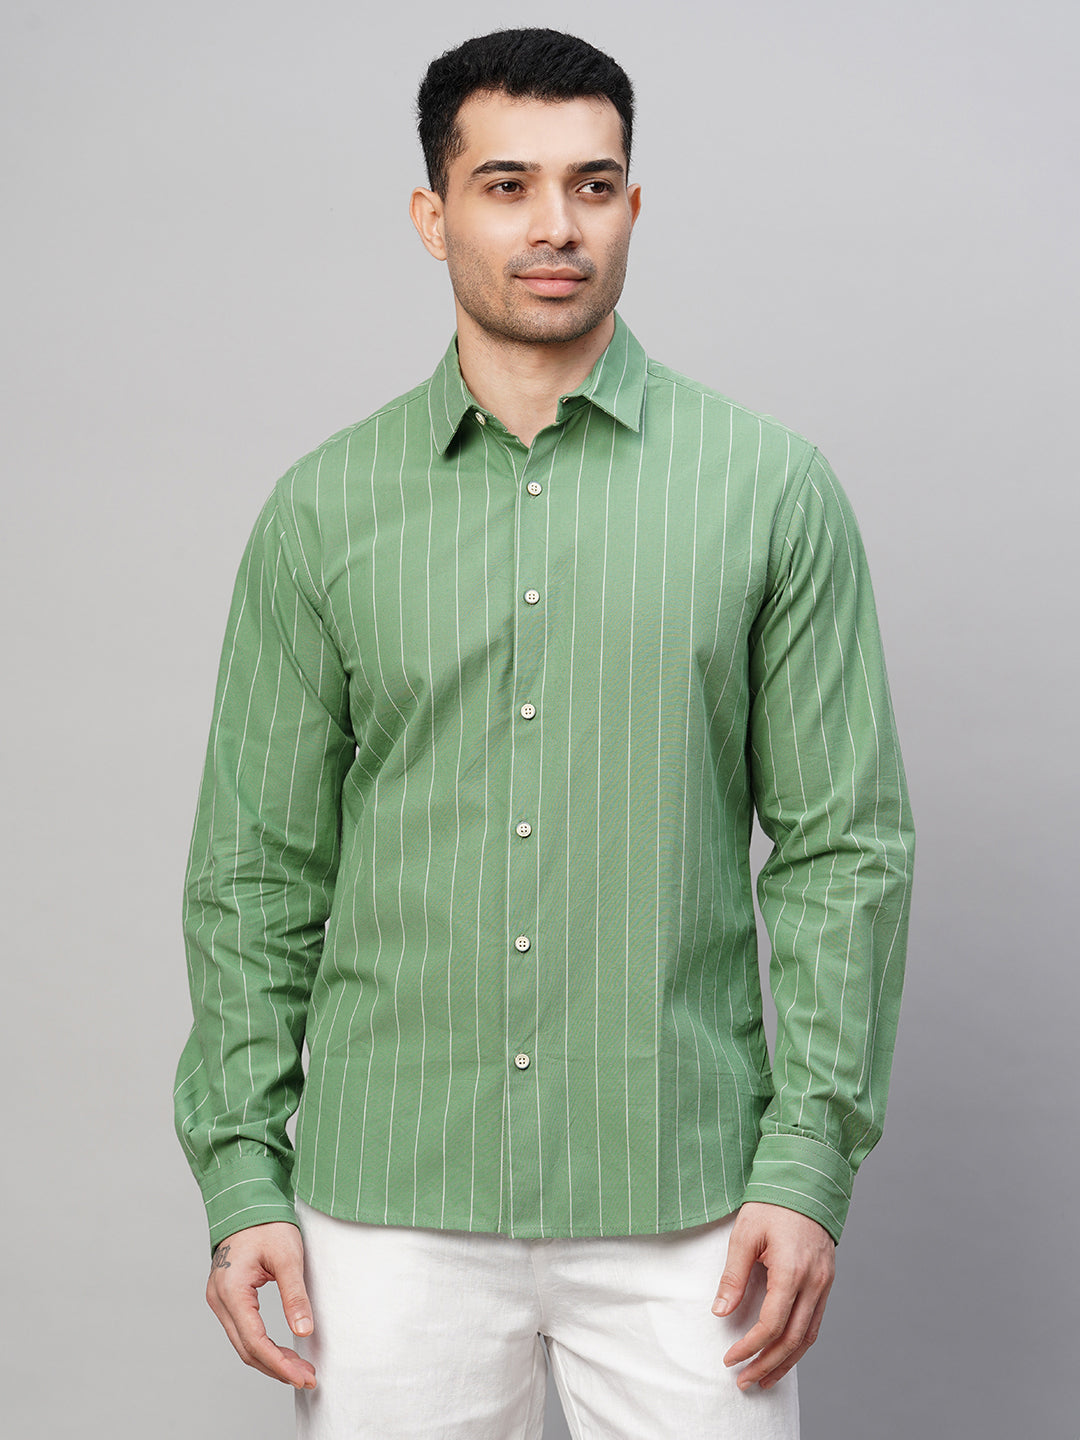 Men's Green Cotton Slim Fit Striped Shirt